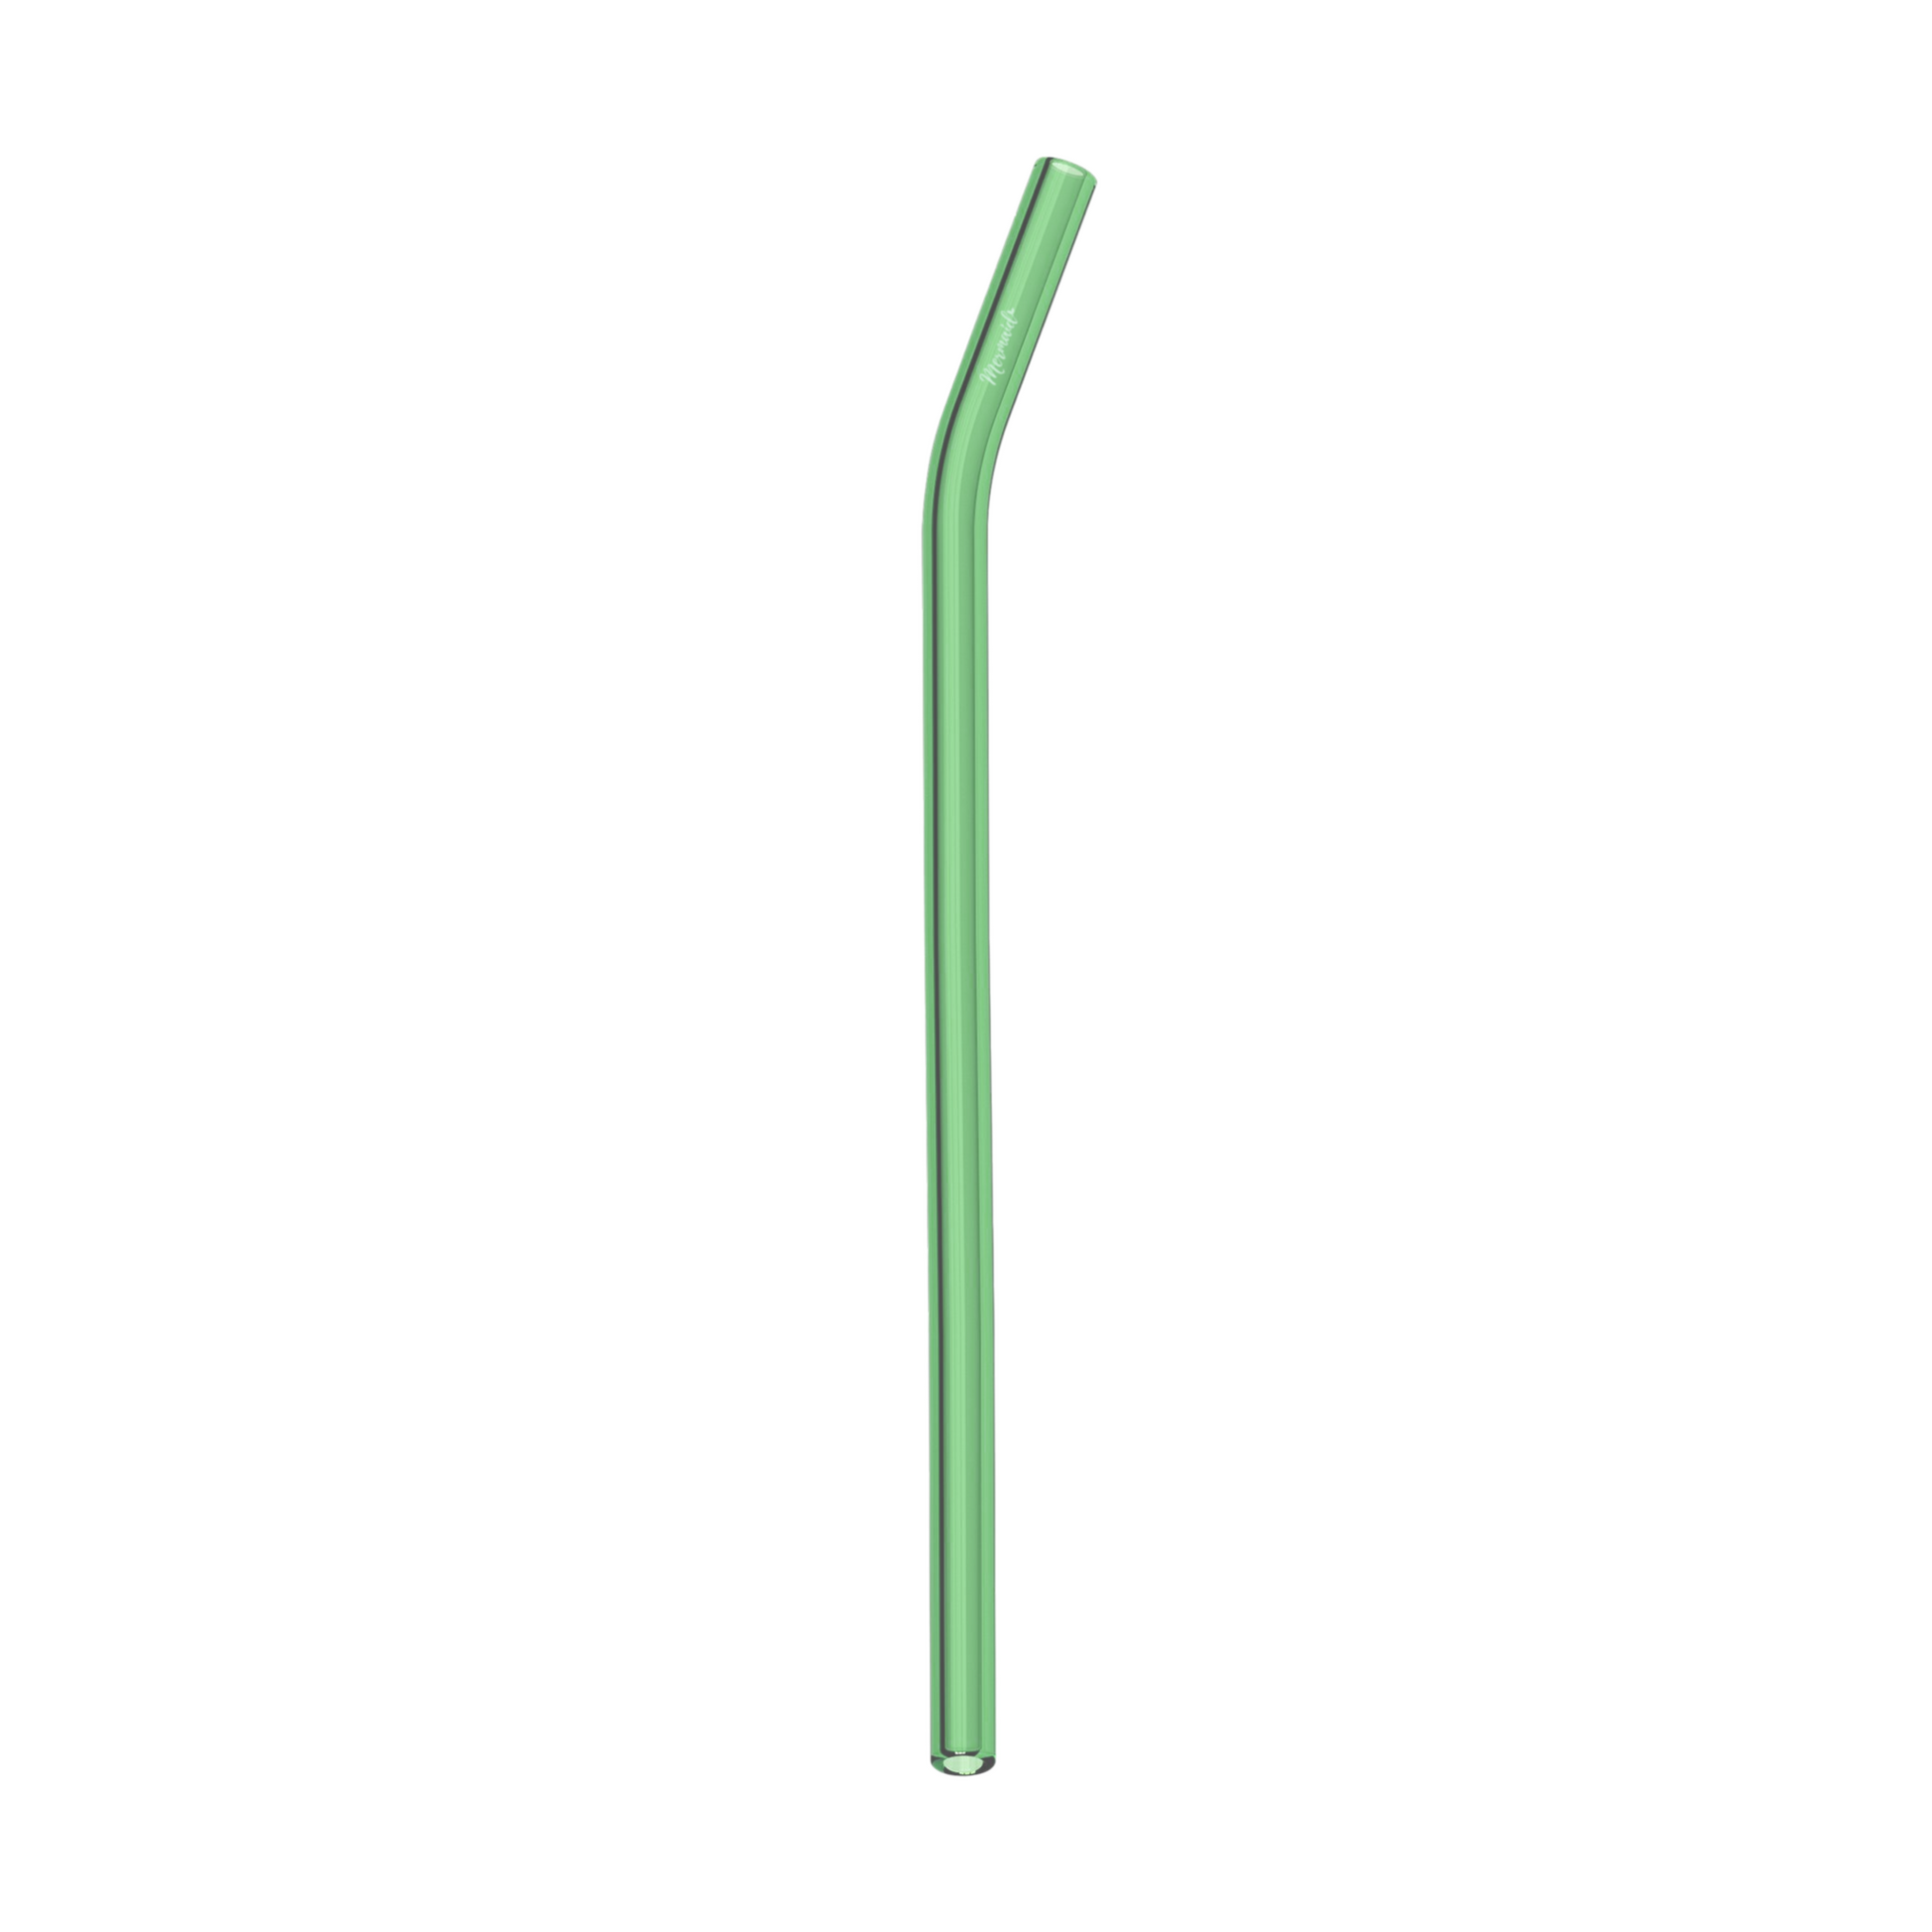 Glass Straws, Mermaid Straw, Reusable Straw, green glass curved single